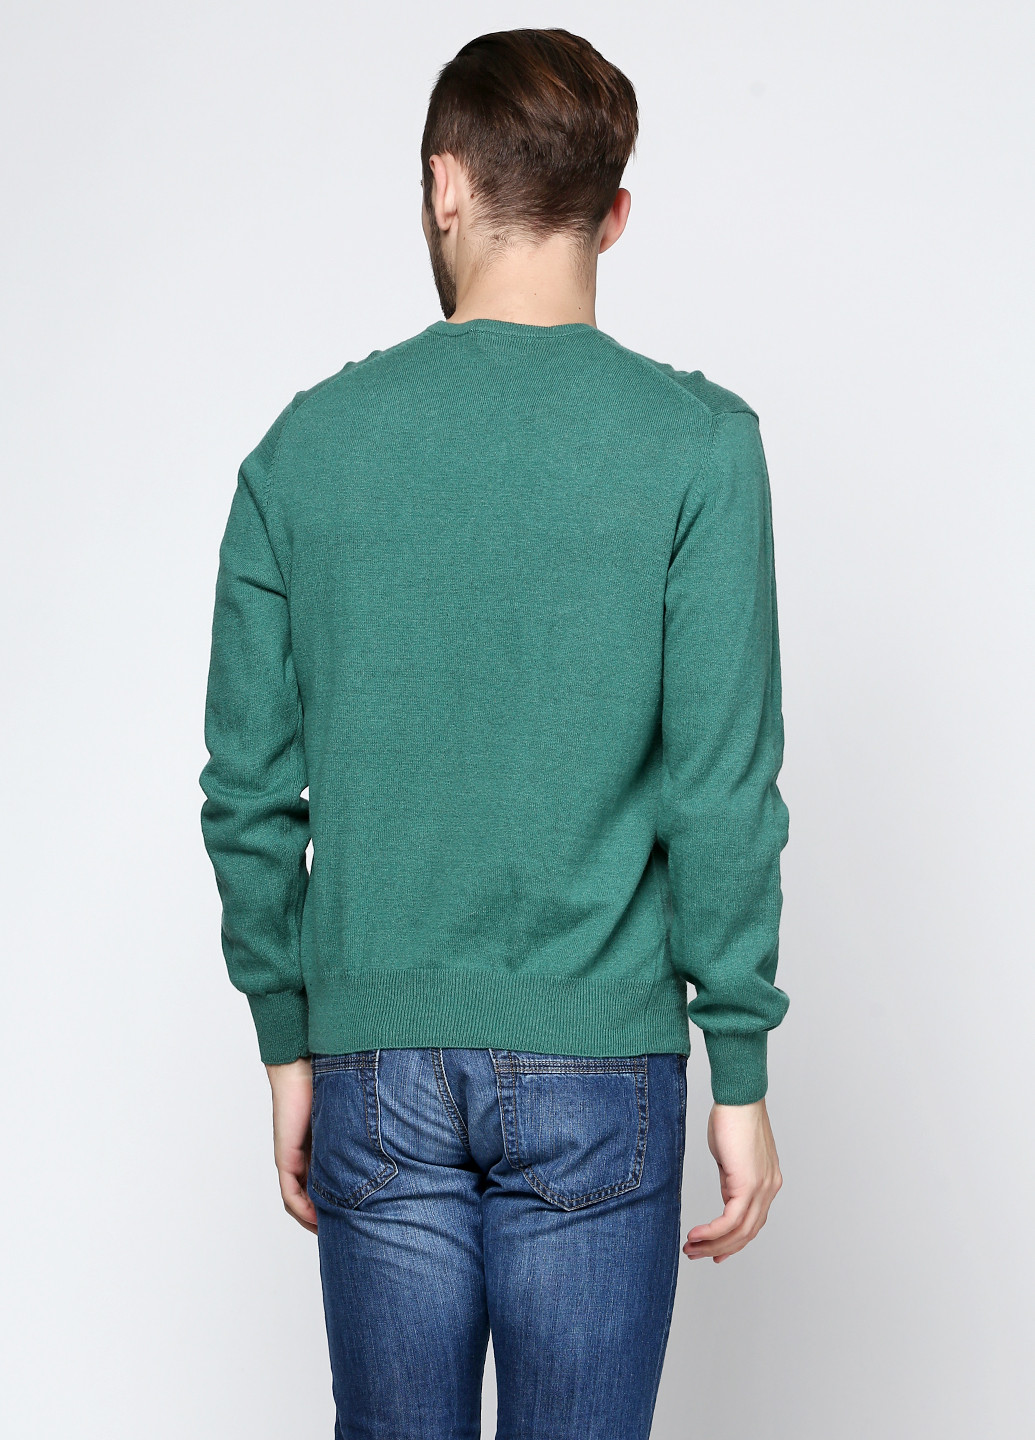 Зеленый демисезонный пуловер пуловер Magliere Di Perugia